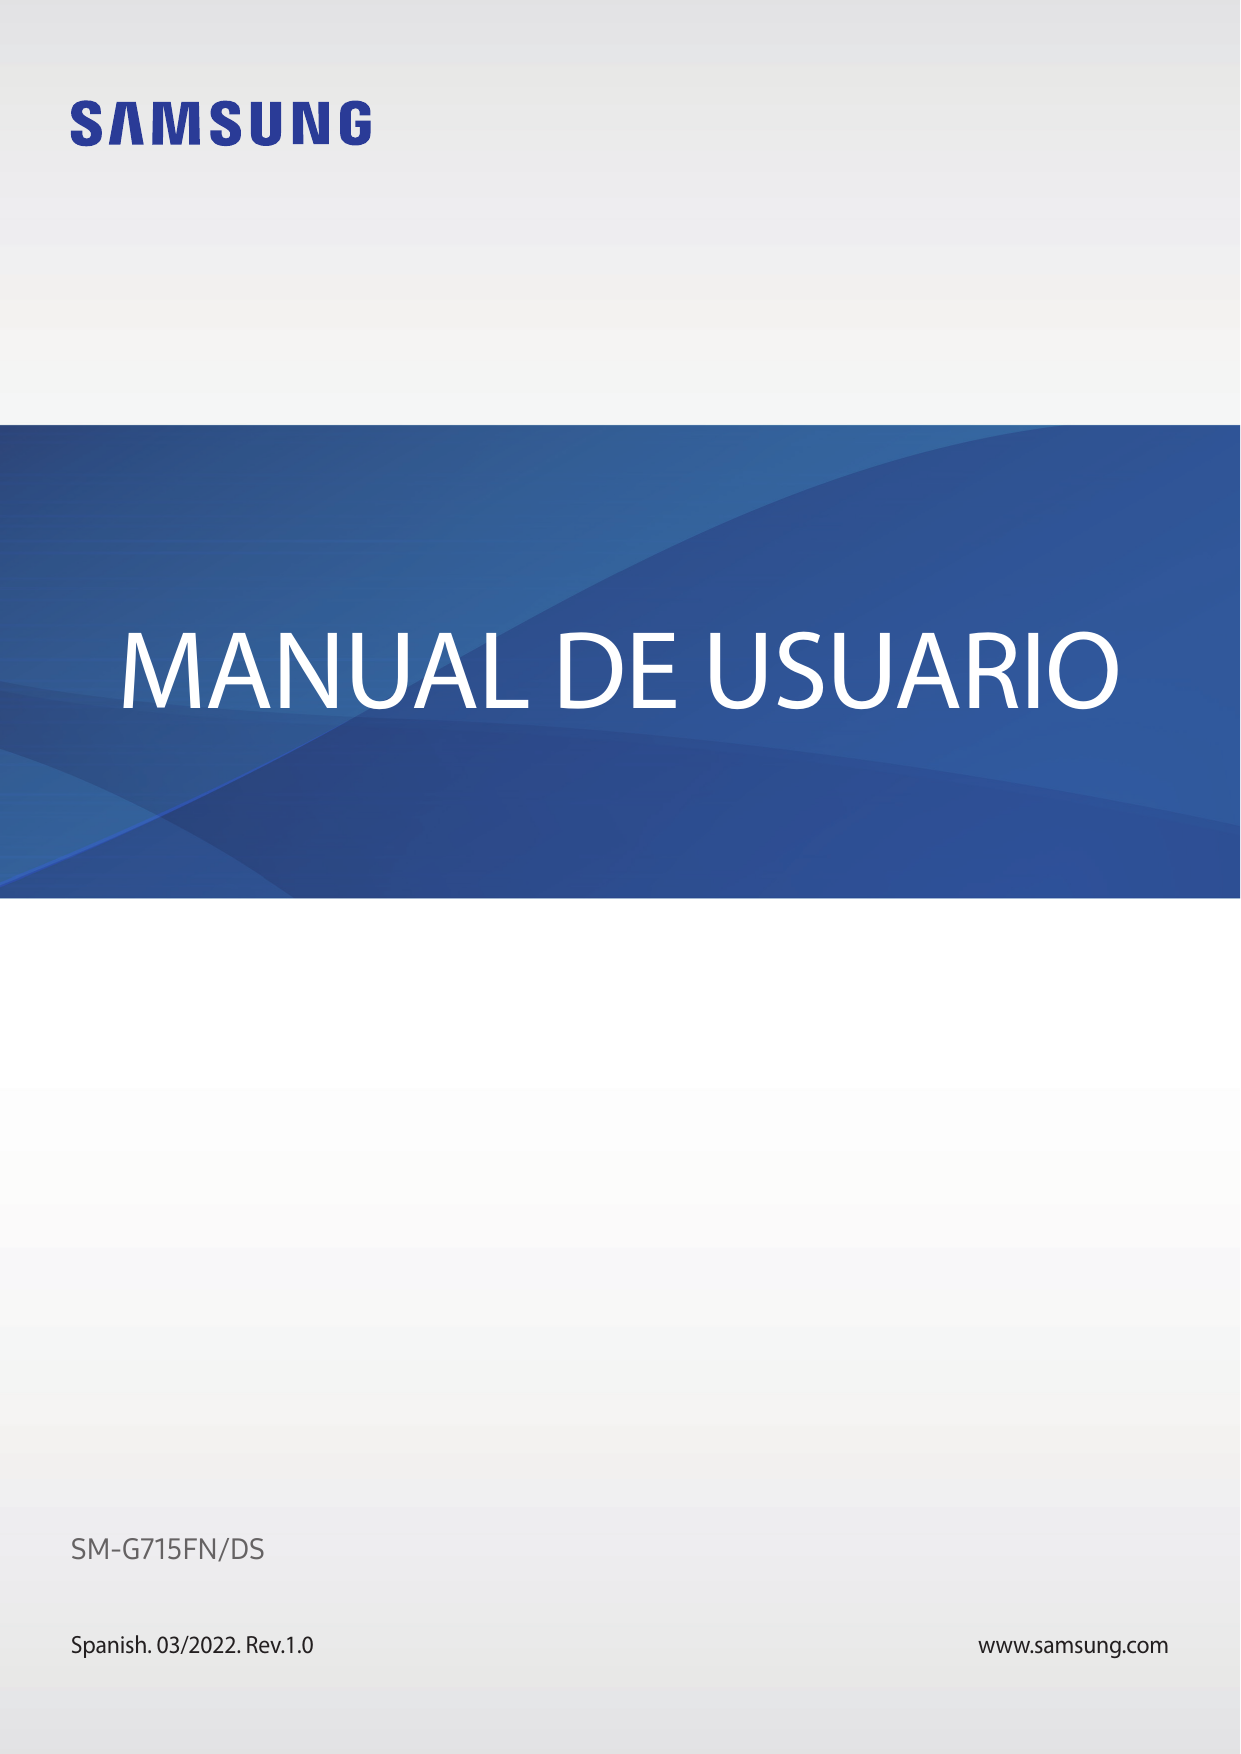 MANUAL DE USUARIOSM-G715FN/DSSpanish. 03/2022. Rev.1.0www.samsung.com